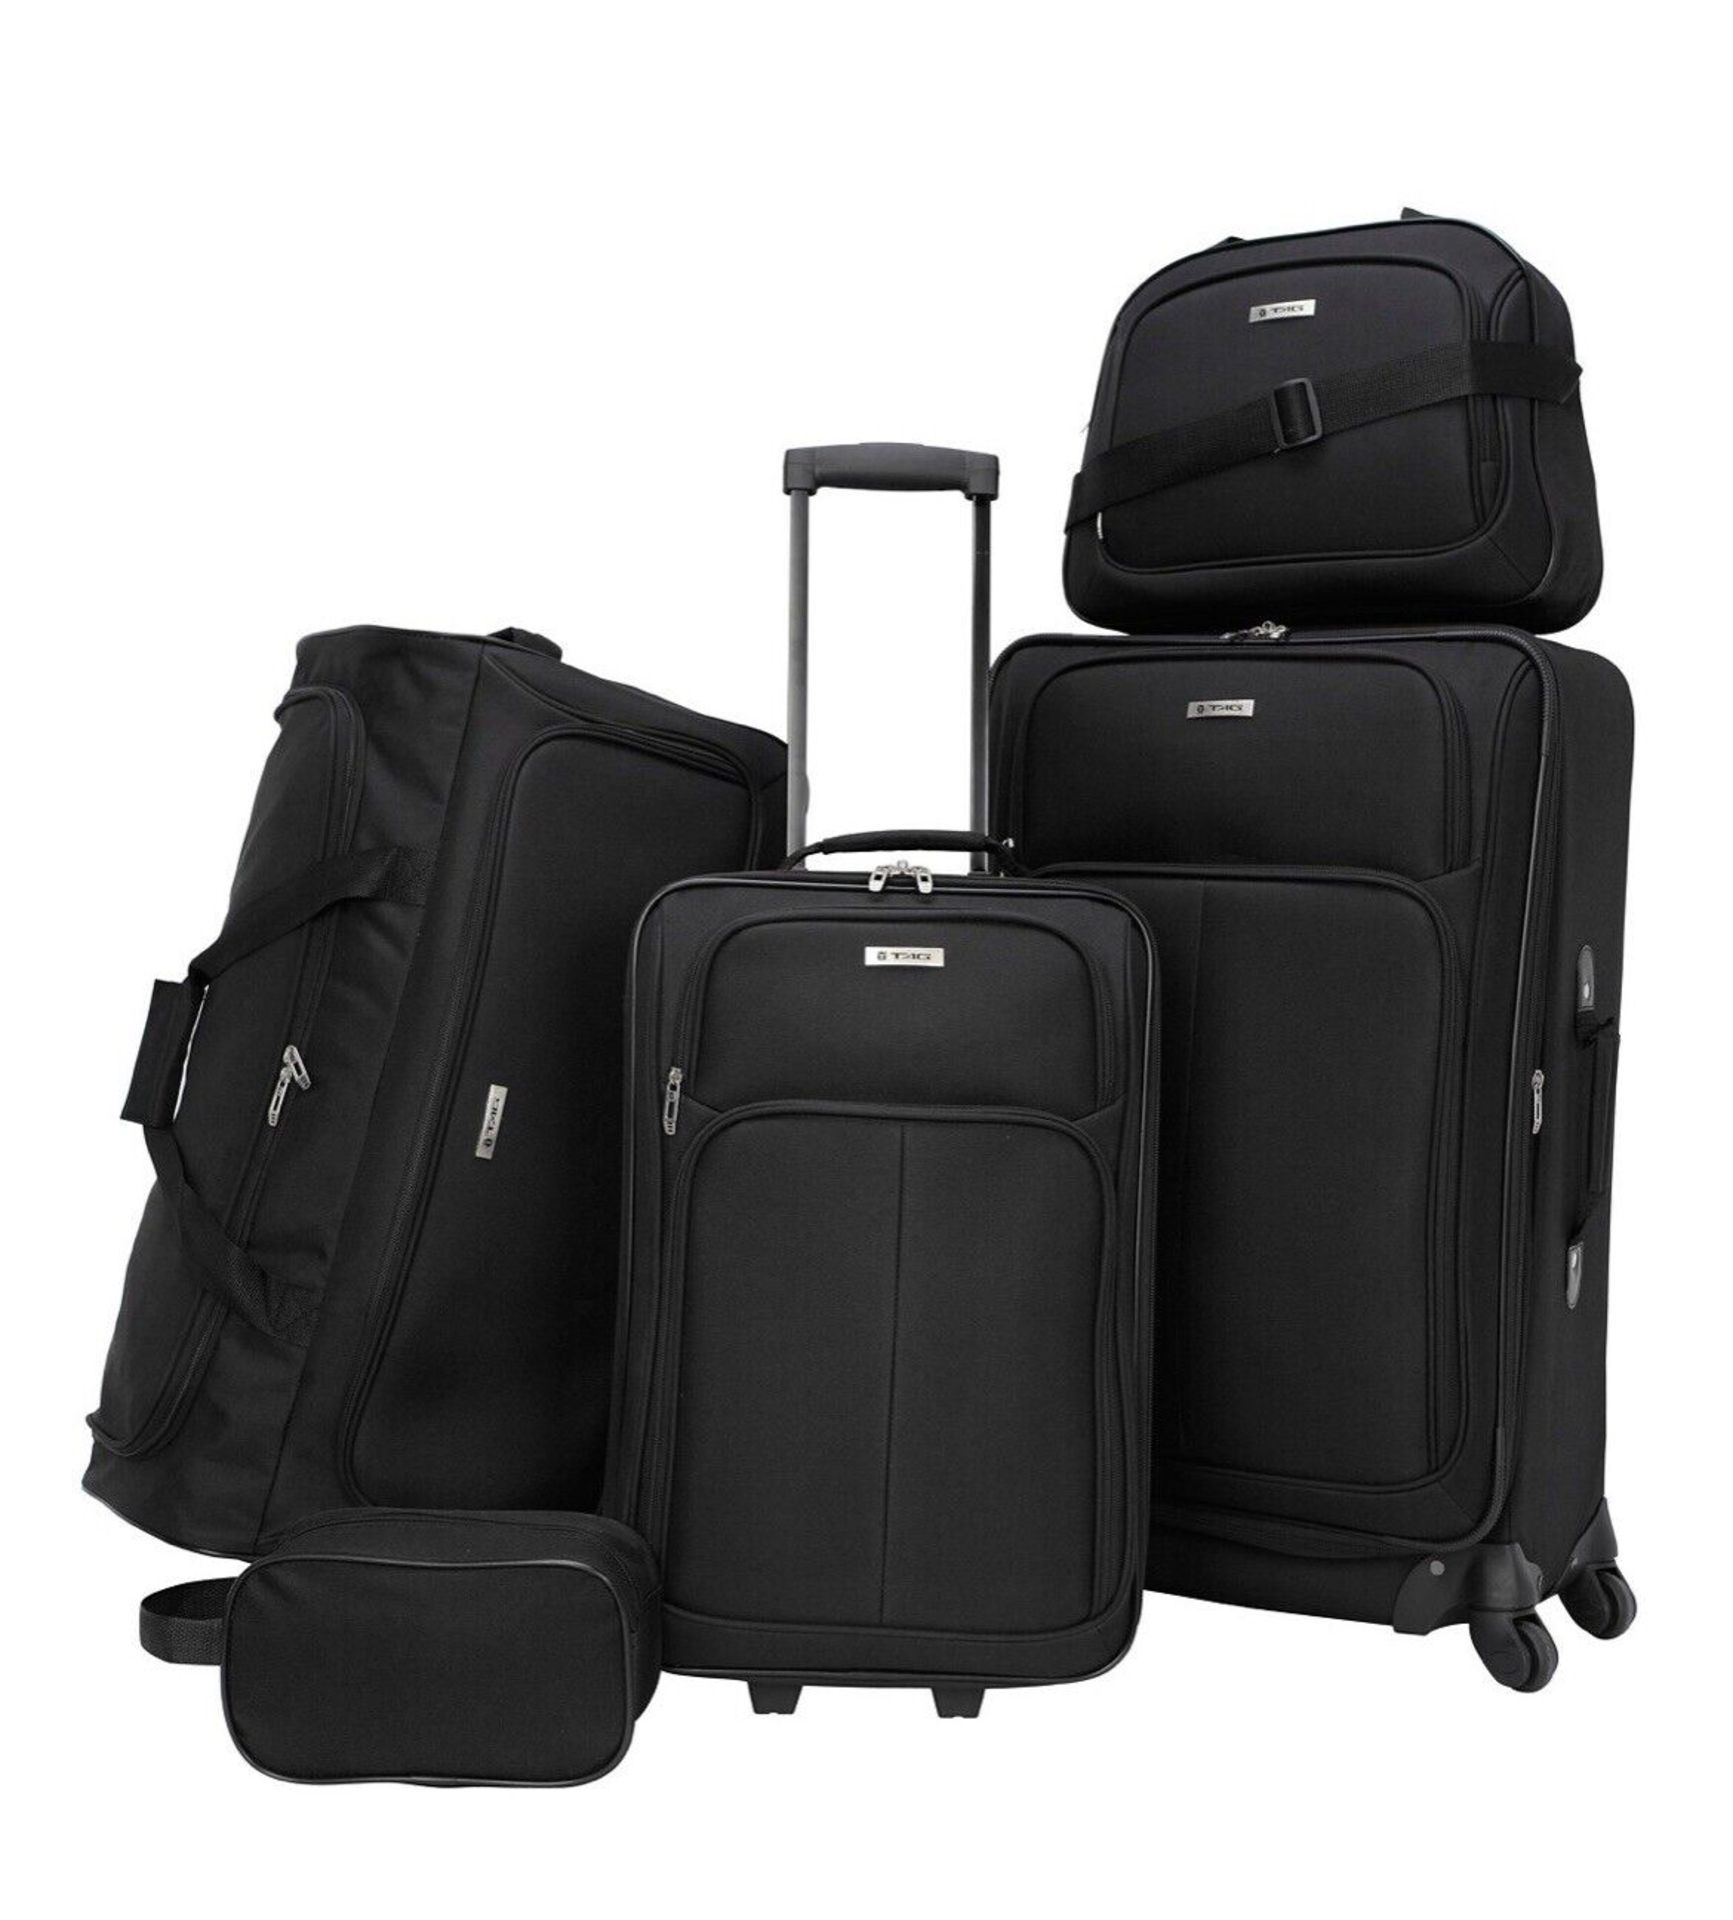 12 x Brand New Set OF TAG Ridgefield Black 5 Piece Softside Luggage Set. RRP $300. This classic